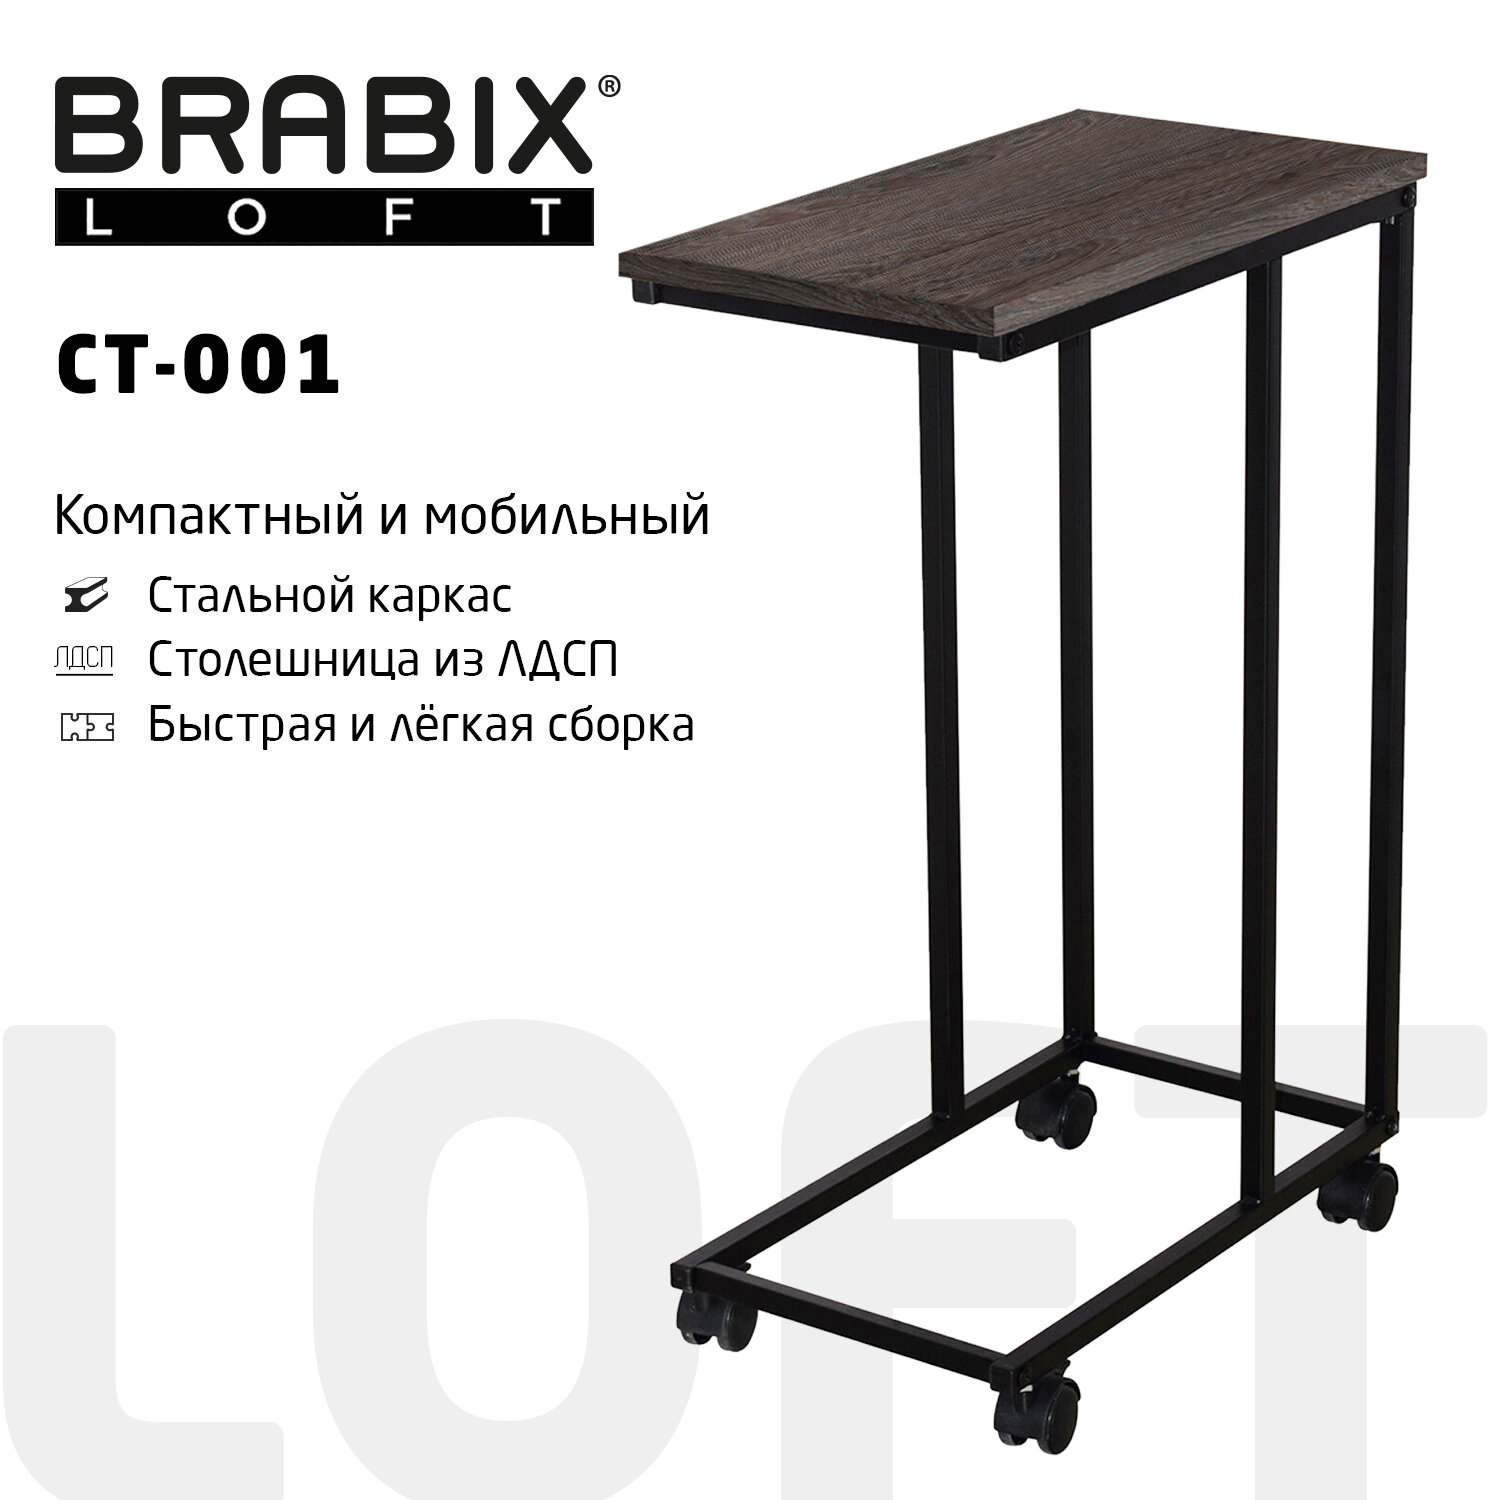 Brabix  BRABIX LOFT CT-001 641859